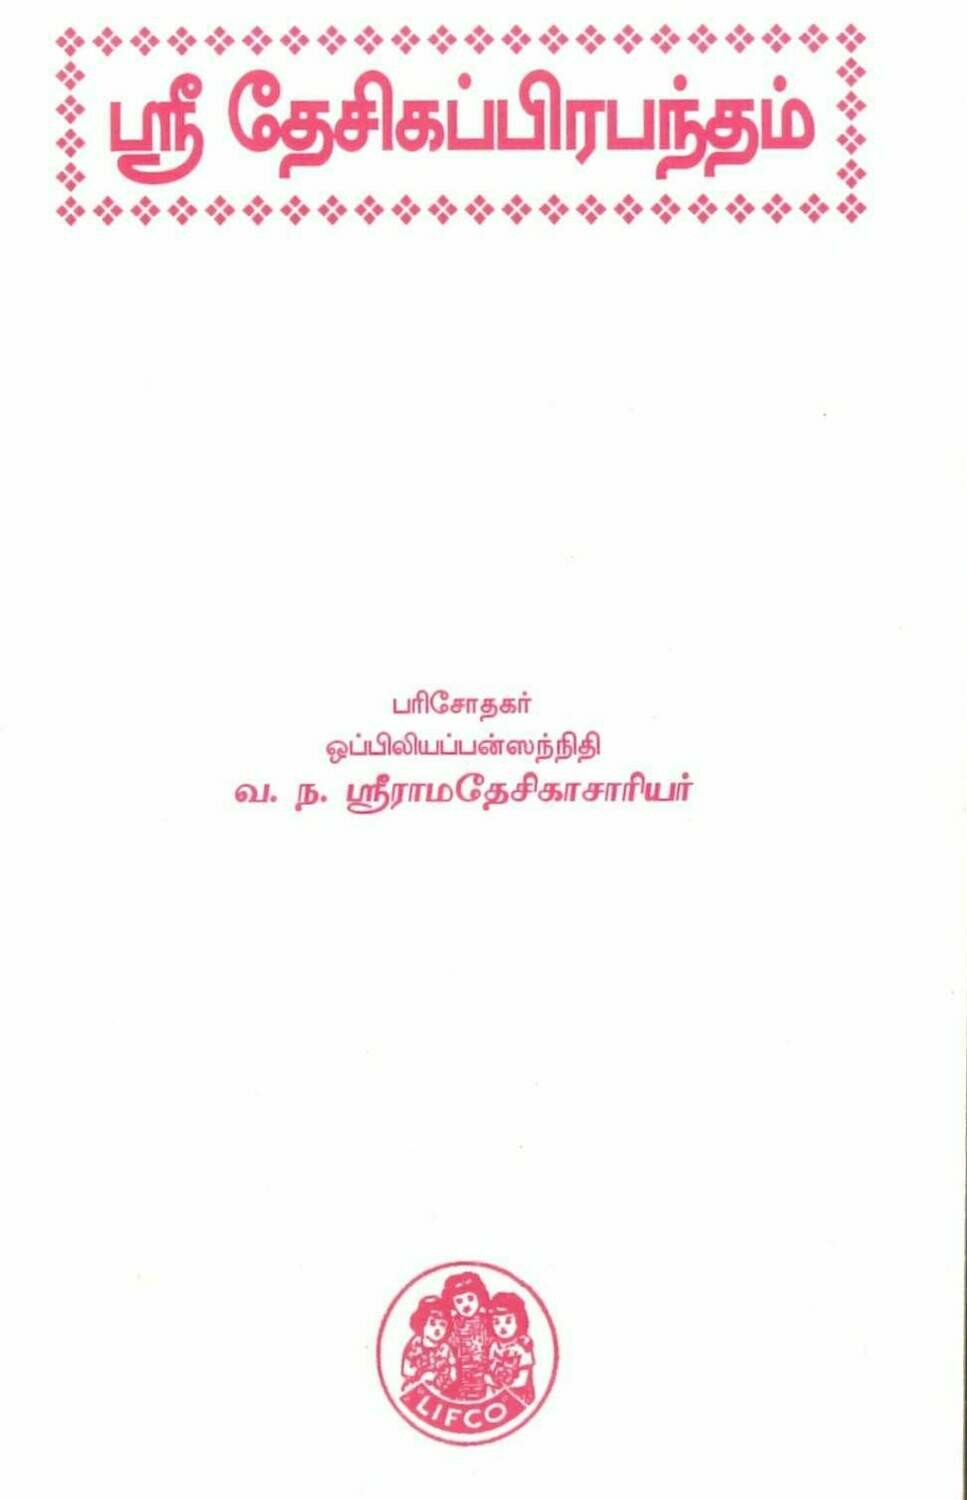 Desika Prabandham Moolam Tamil , Lifco - தேசிக ப்ரபந்தம் மூலம் தமிழில்